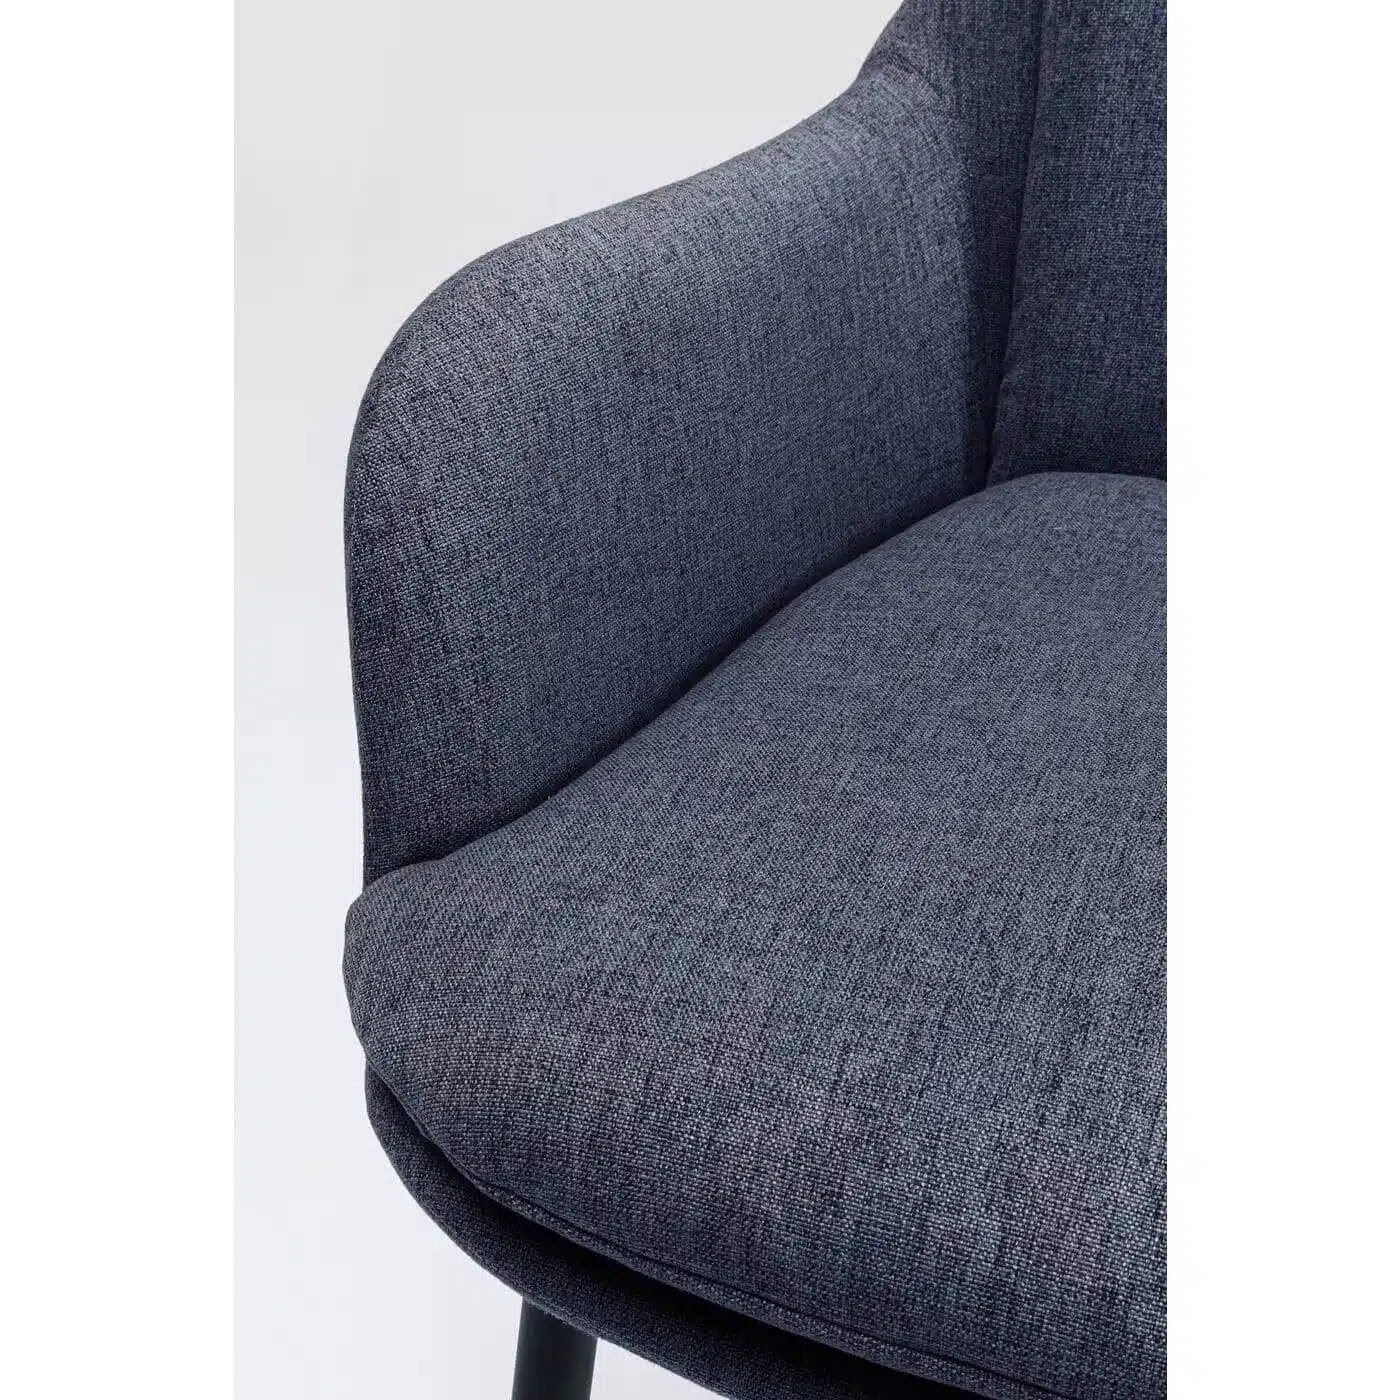 Chaise avec accoudoirs Thea grise Kare Design